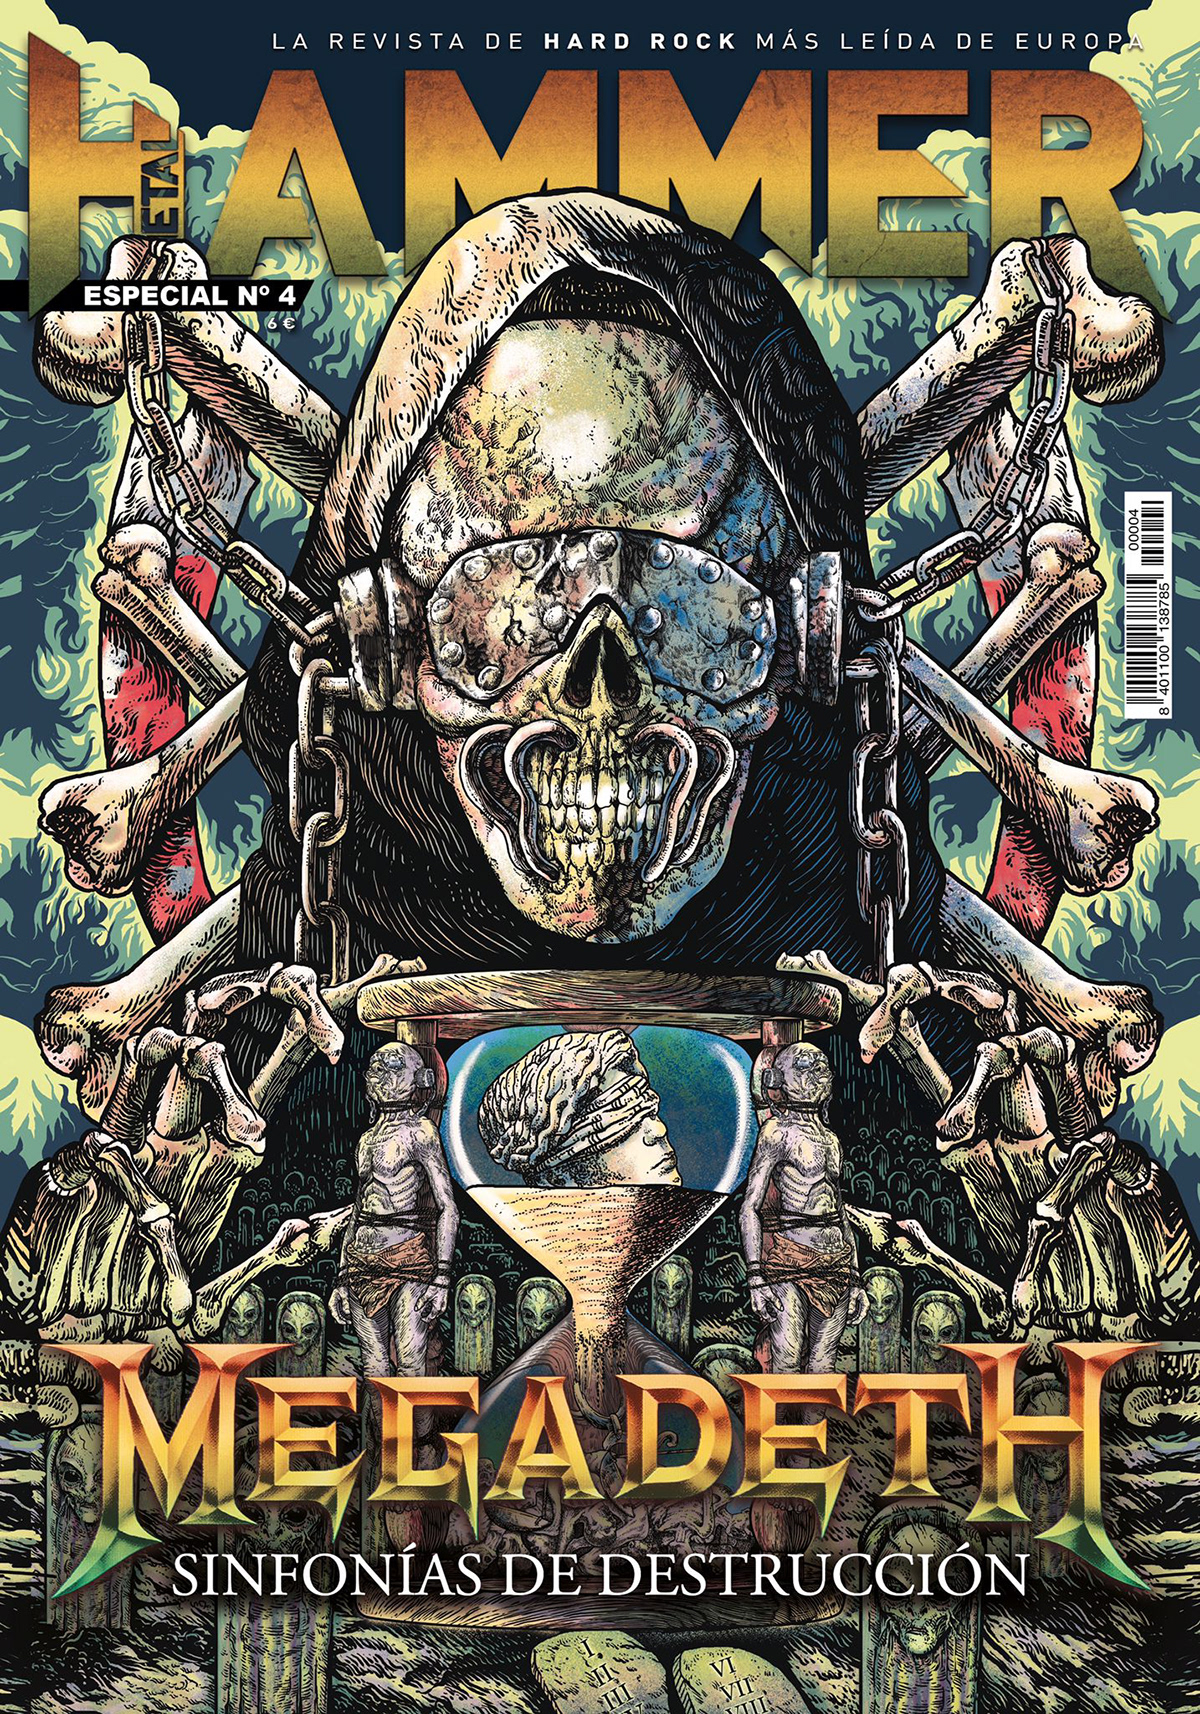 megadeth anniversary Vic metal music skull skeleton aliens hourglass metalhammer